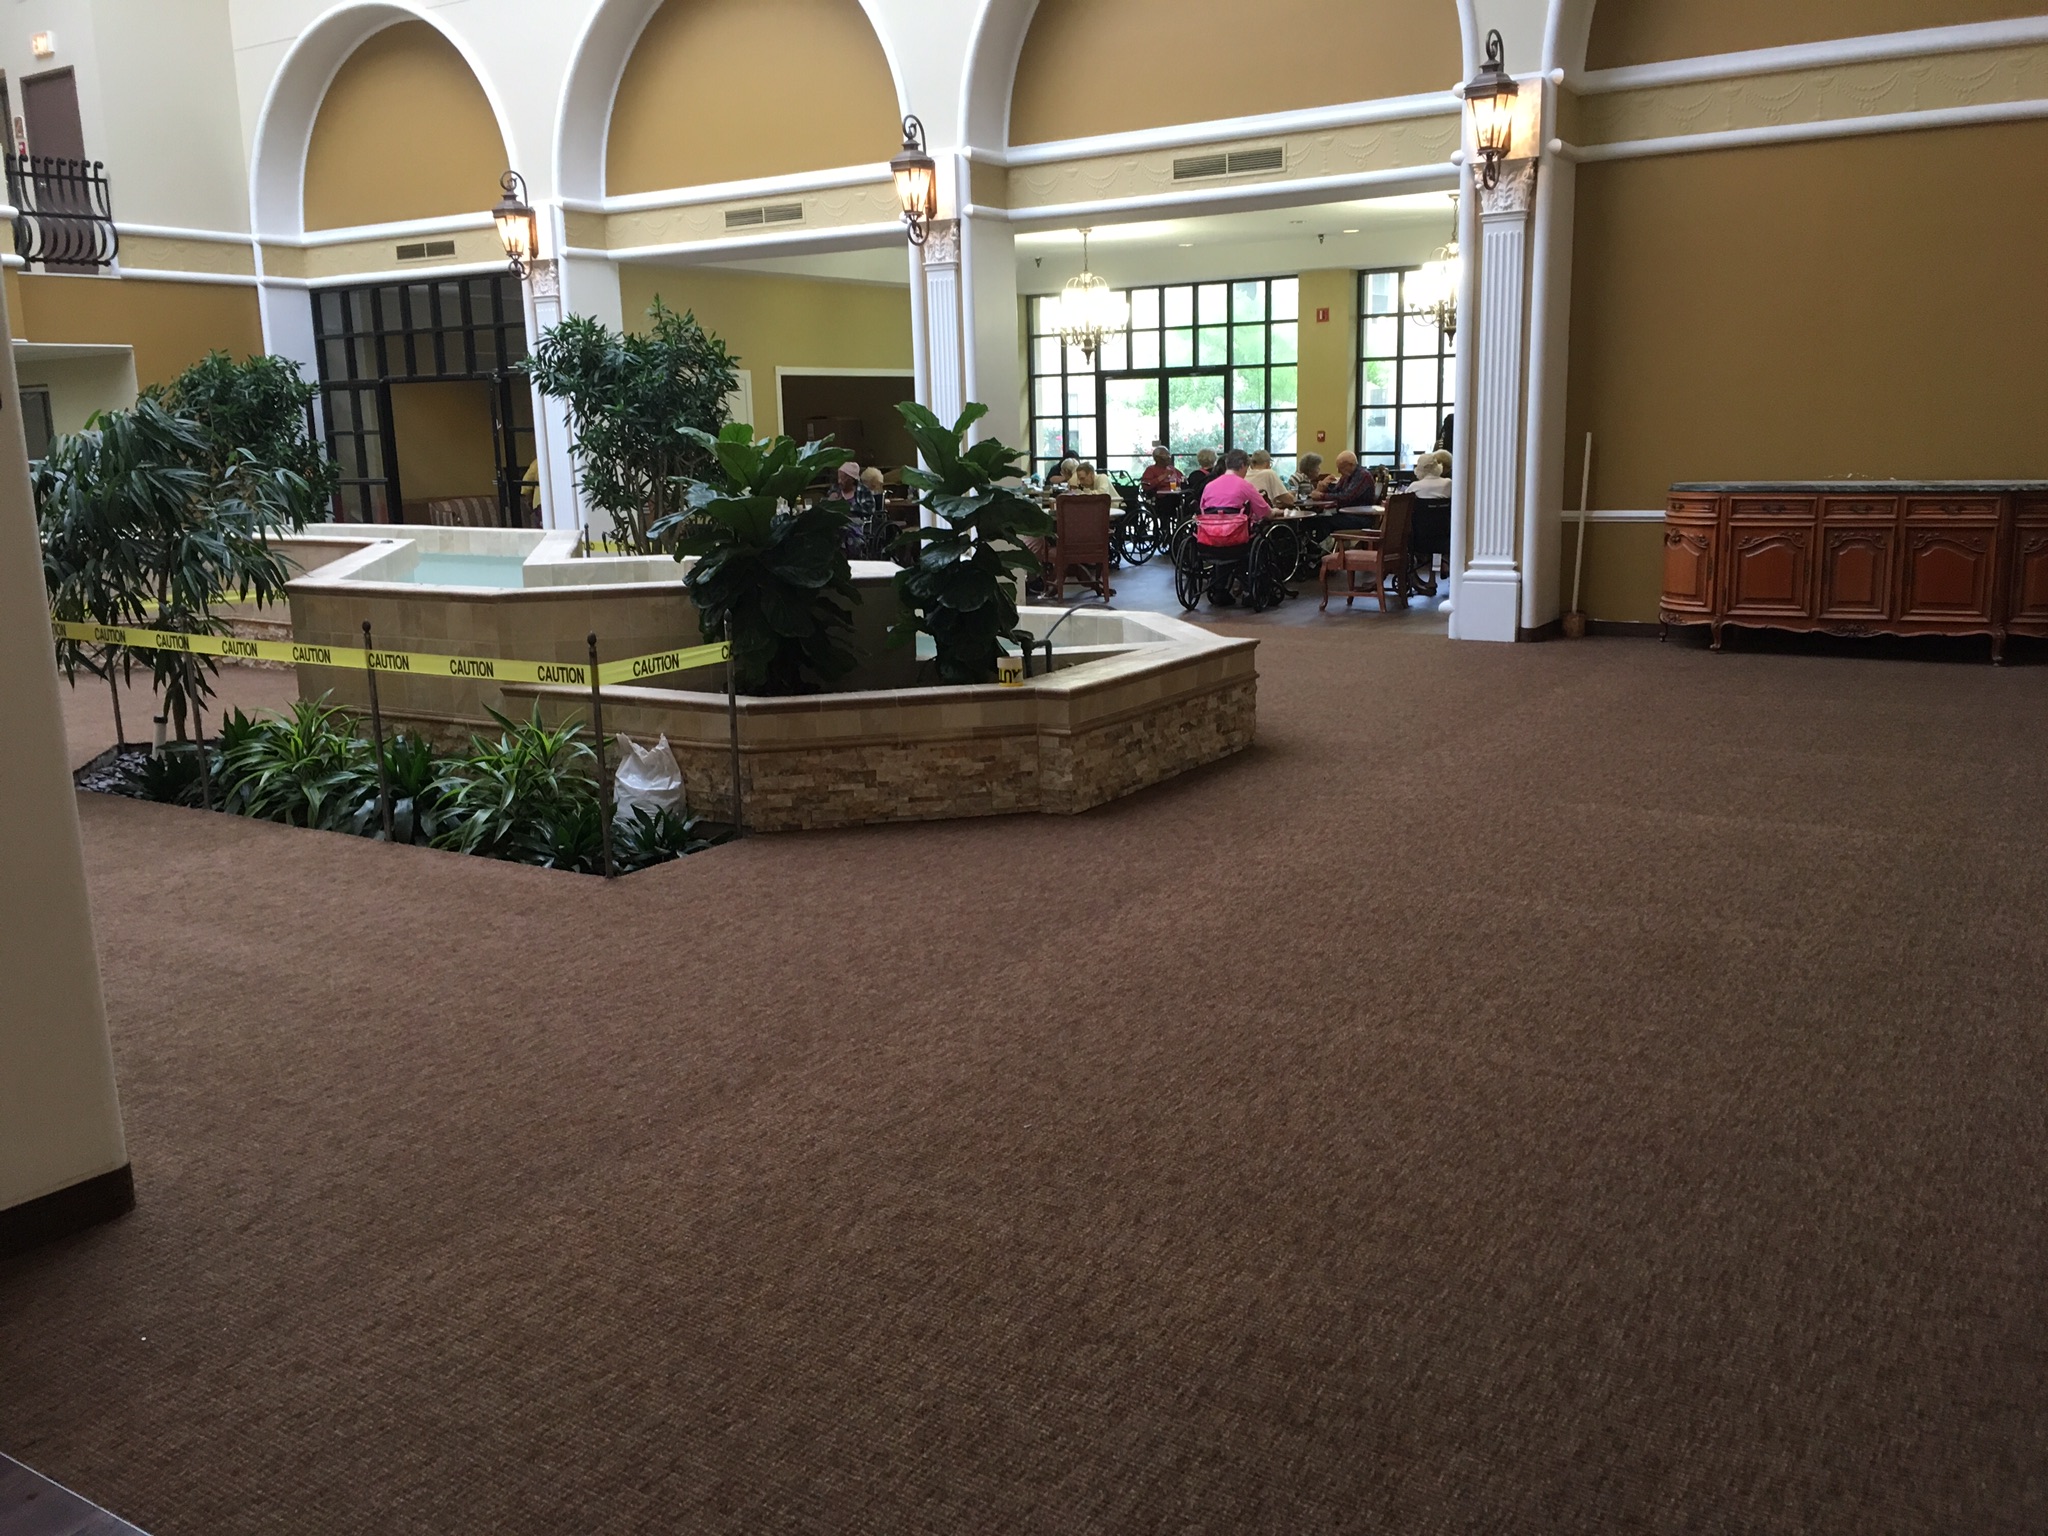 StoneGate Senior Living's Park  Place Nursing and Rehabilitation Center Grand Renovation:  Inviting Interior Courtyard